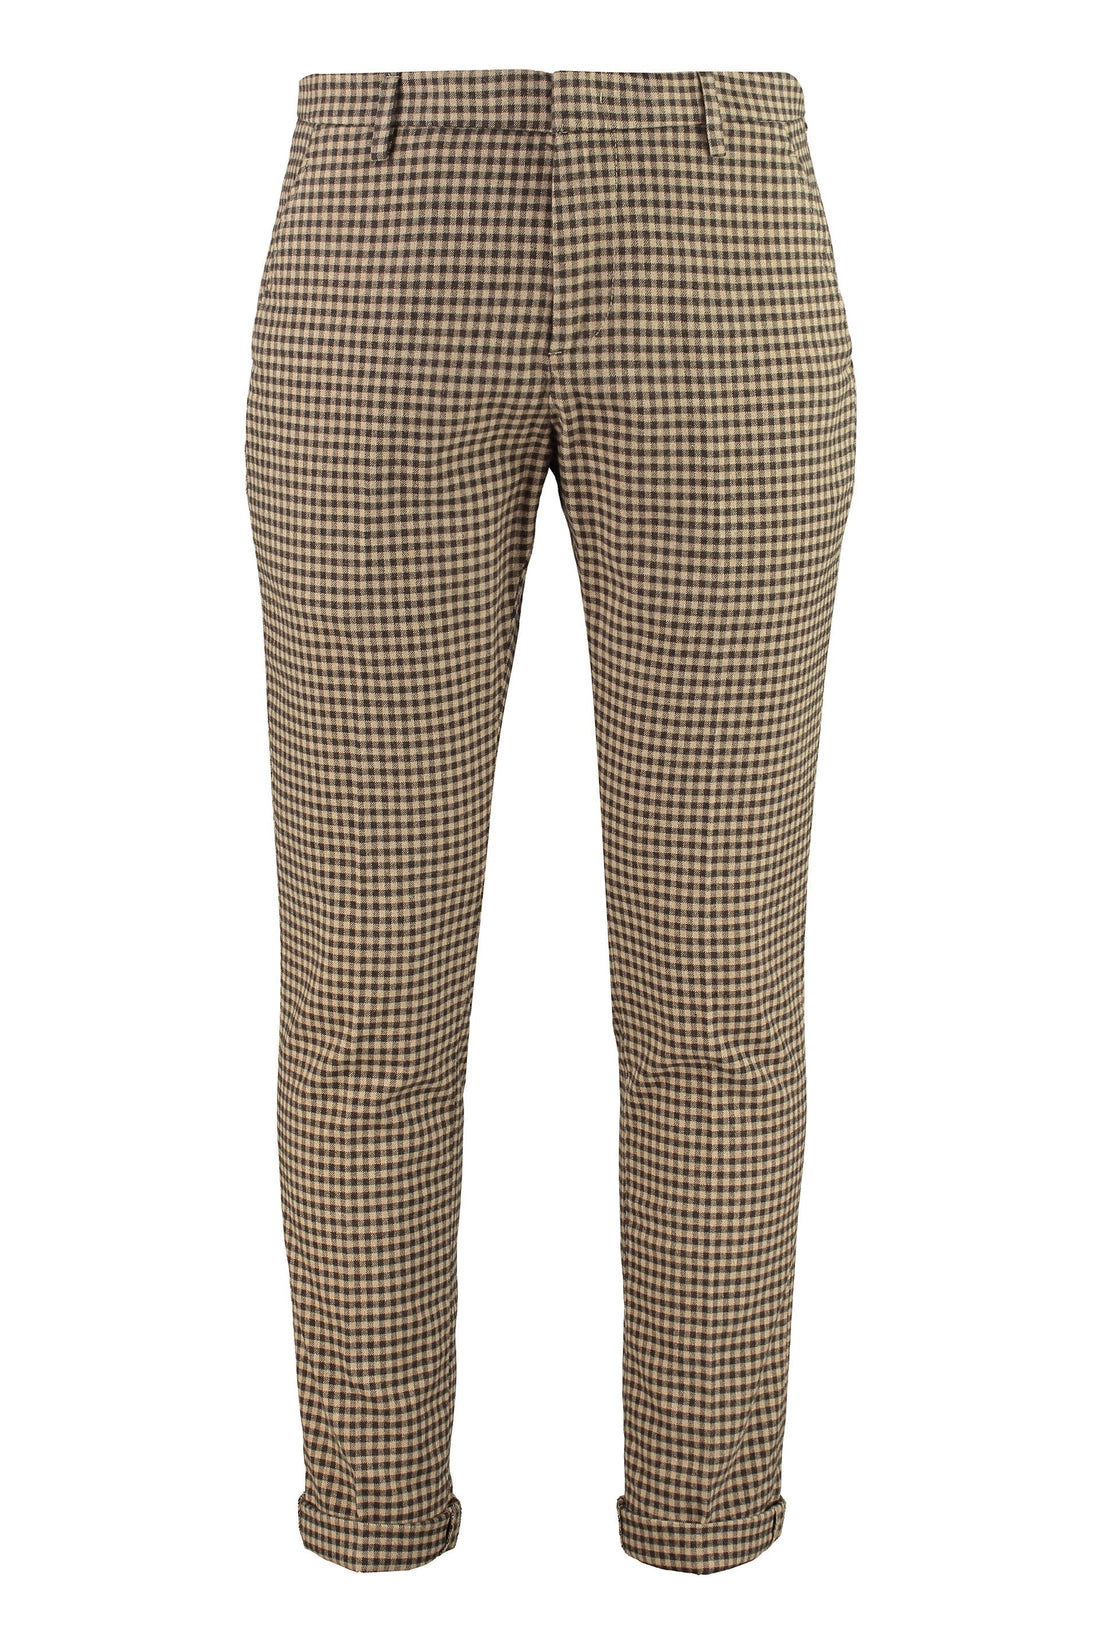 Dondup-OUTLET-SALE-Gaubert gingham cotton trousers-ARCHIVIST